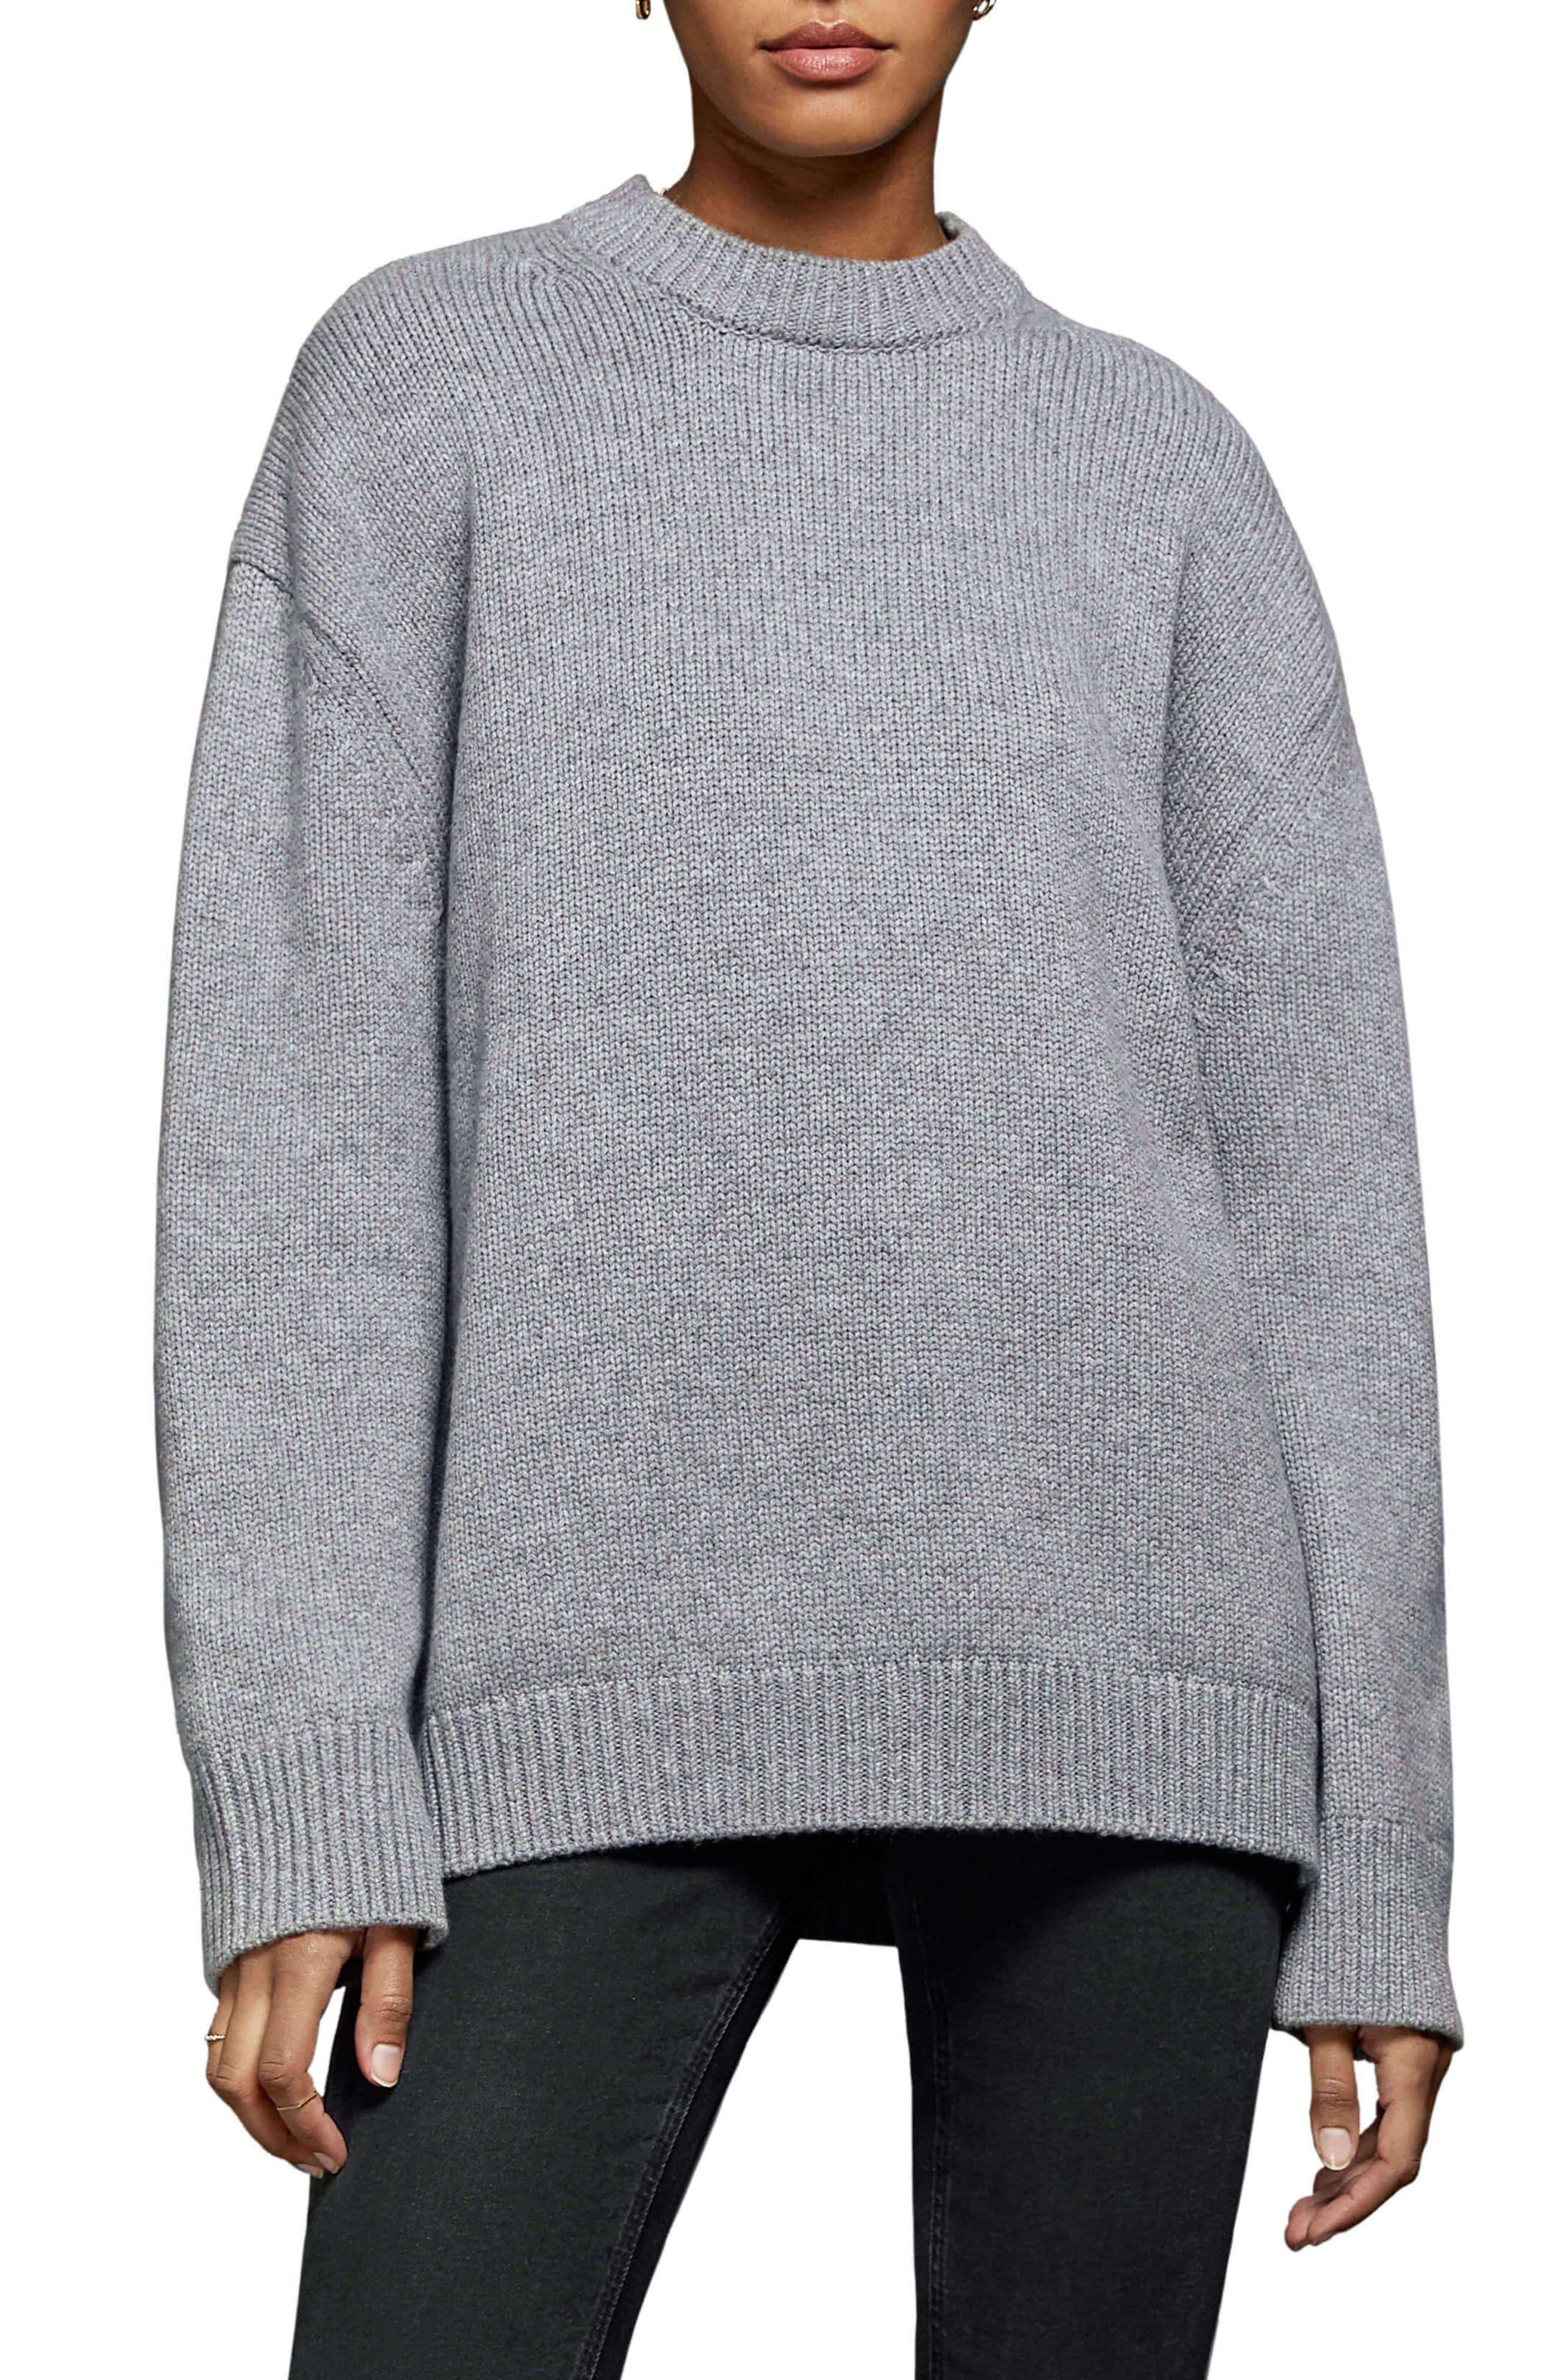 Anine Bing Rosie Oversize Cashmere Sweater in Gray - Lyst